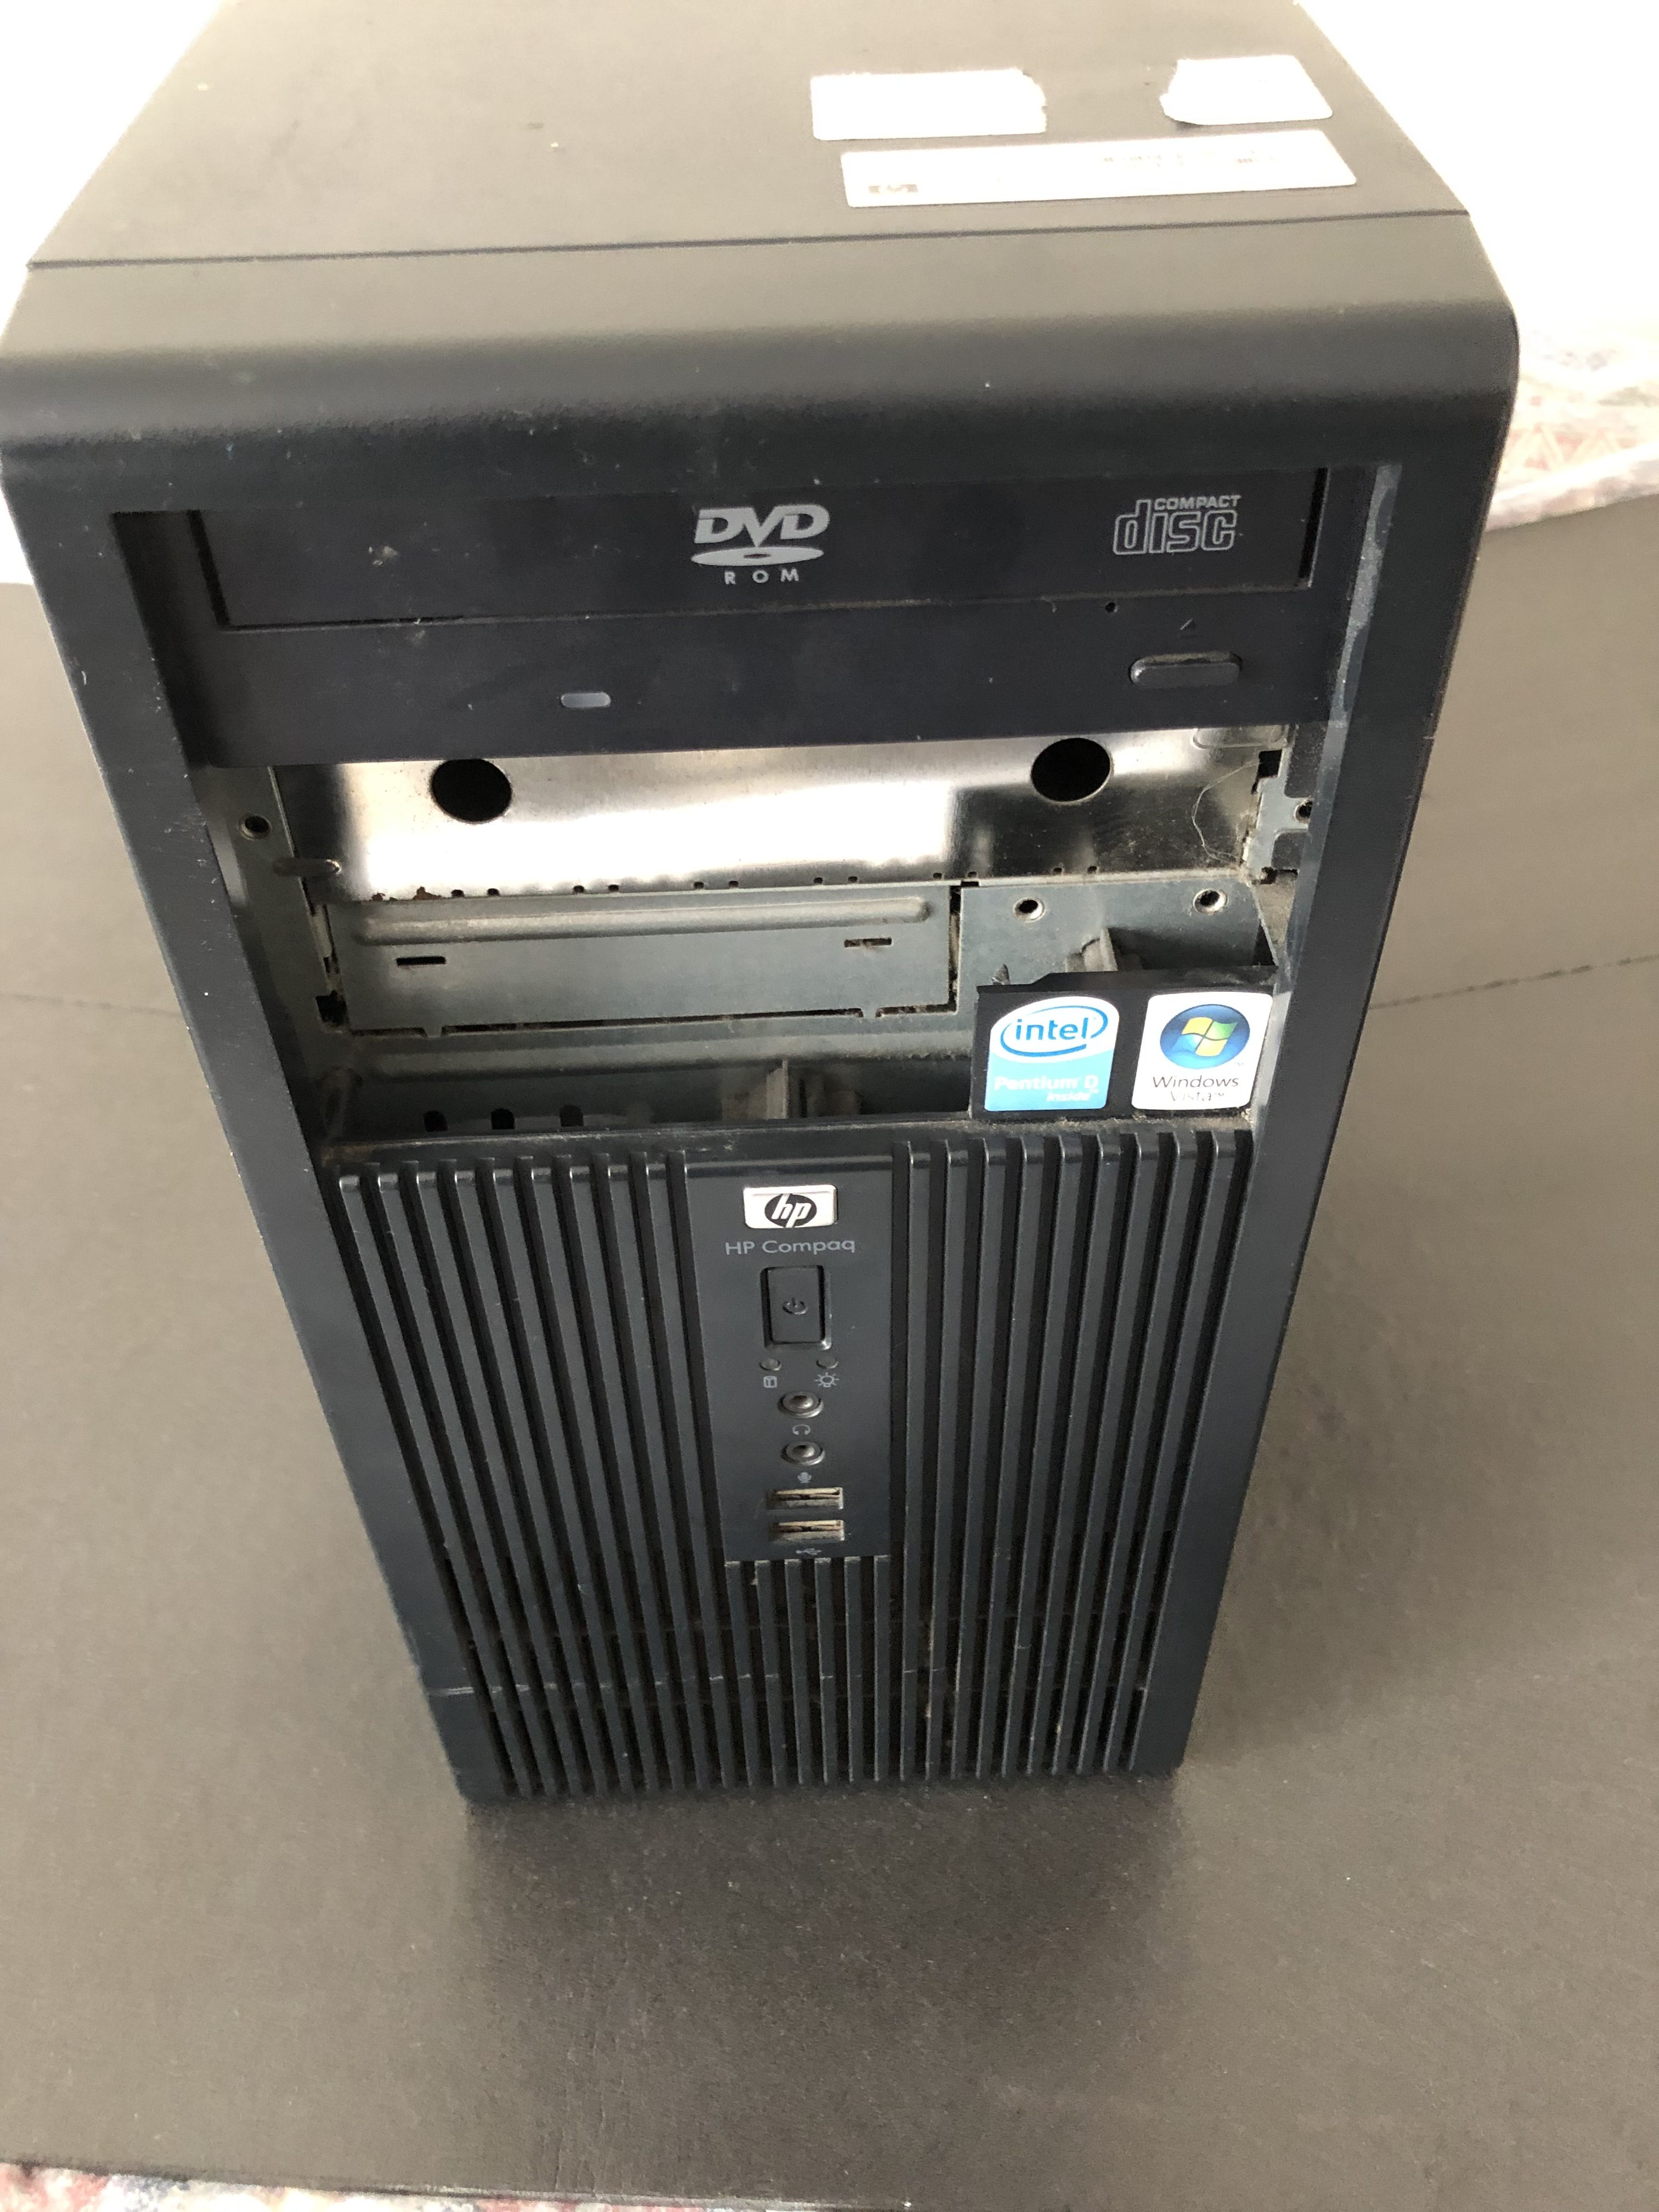 HP Compaq DX2300 Microtower, Black, Windows 10 Home. Intel Dual Core Processor